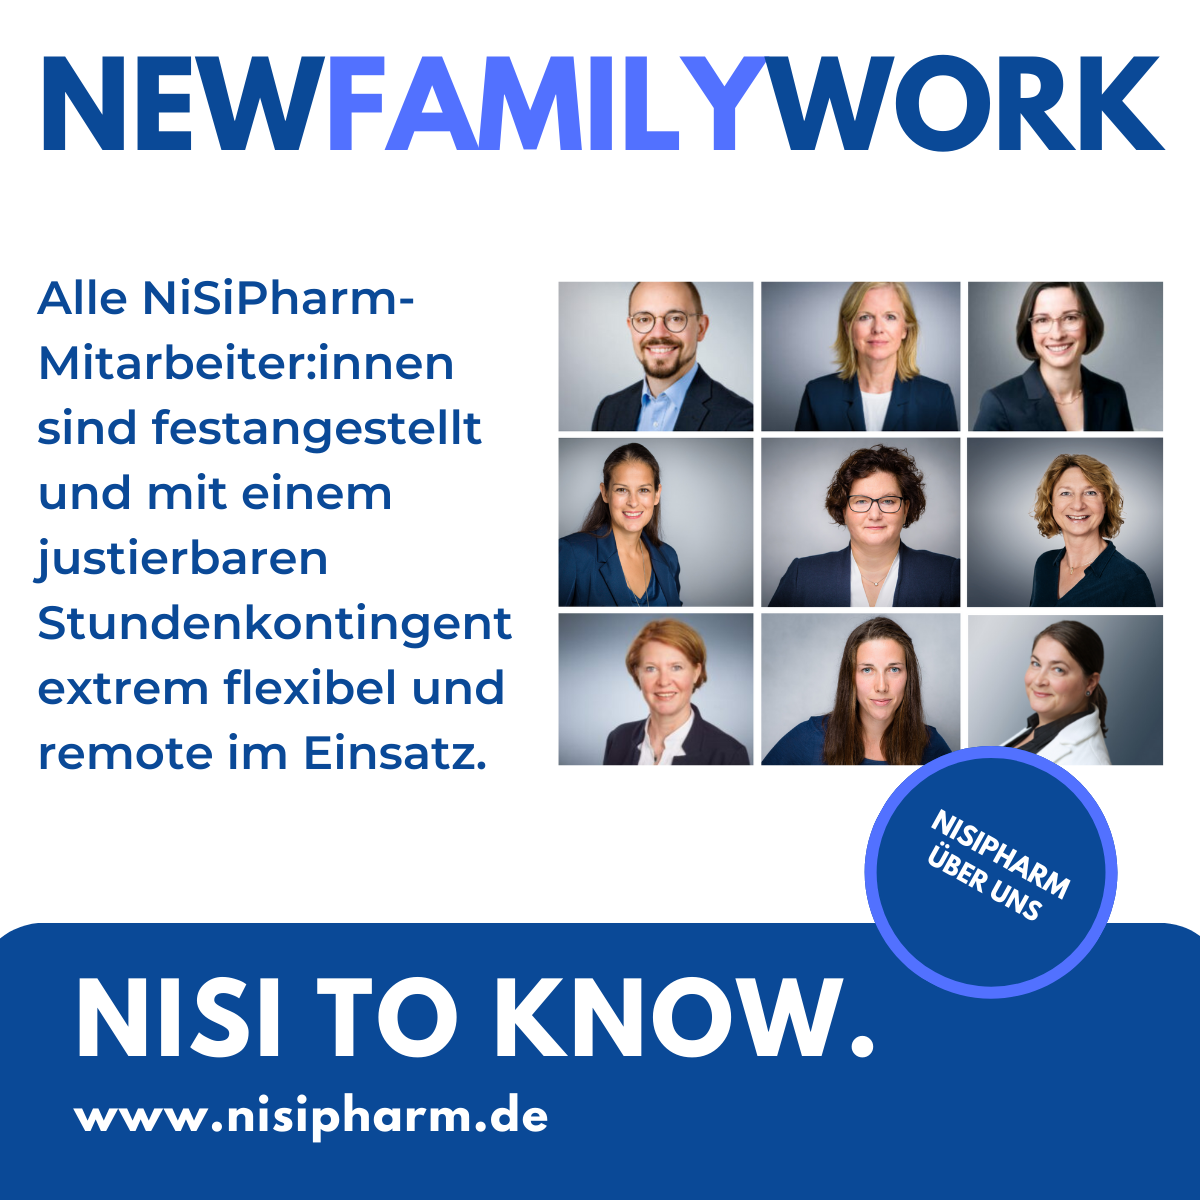 Infokachel zu New Family Work bei NiSiPharm